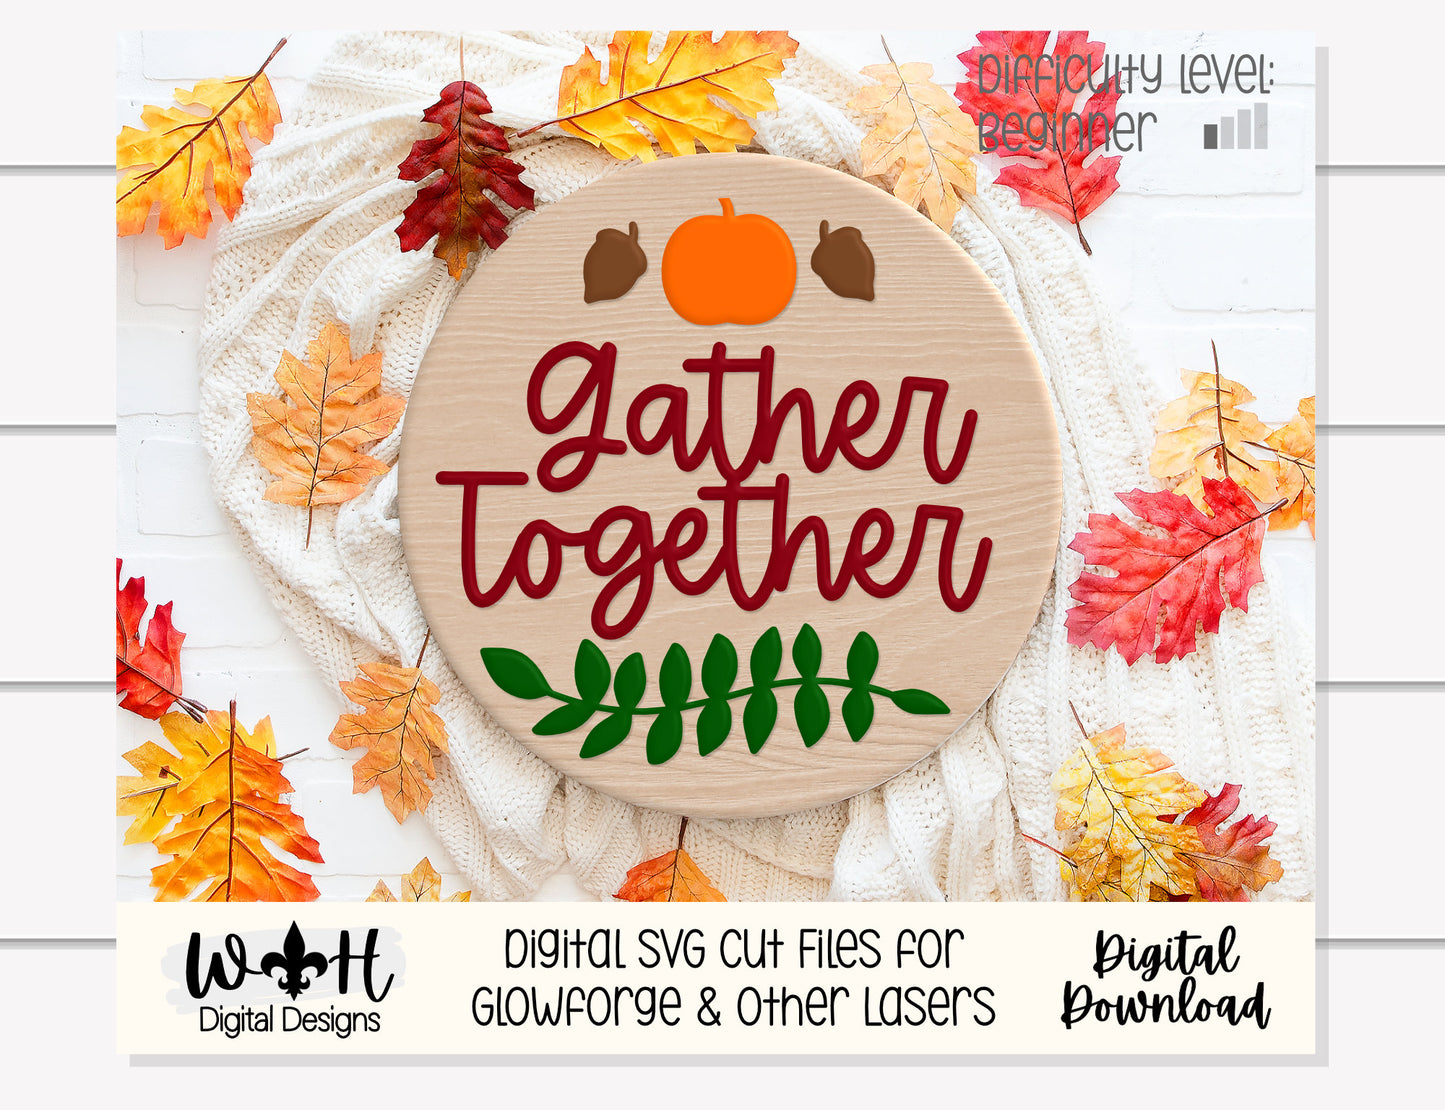 Gather Together Pumpkin and Greenery Door Hanger - Seasonal Sign Making and DIY Kits - Cut File For Glowforge Laser - Digital SVG File